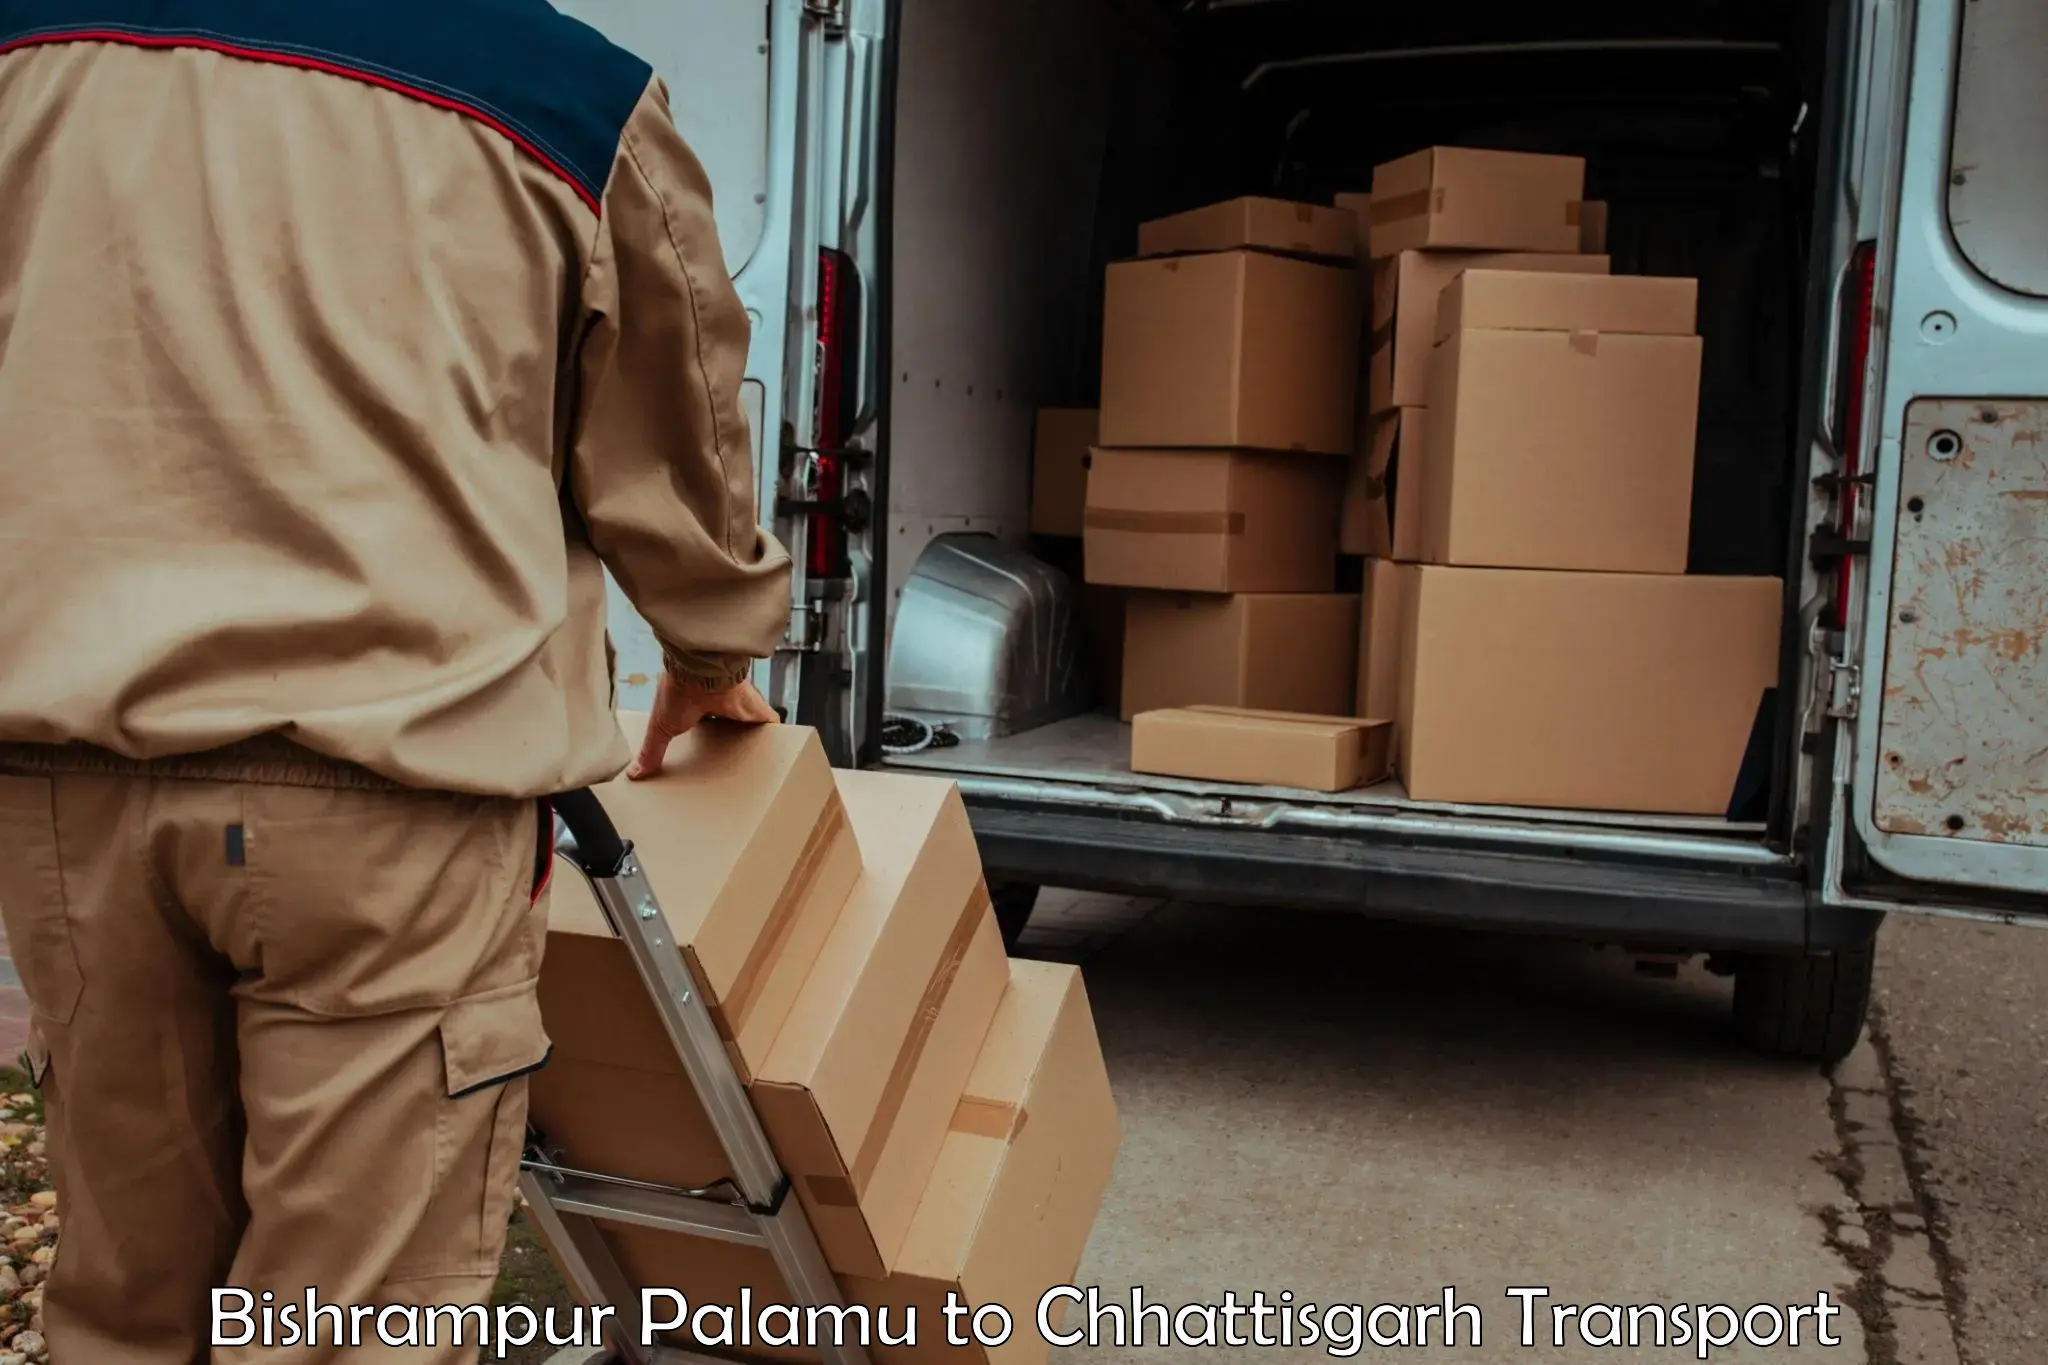 Goods delivery service Bishrampur Palamu to Raipur